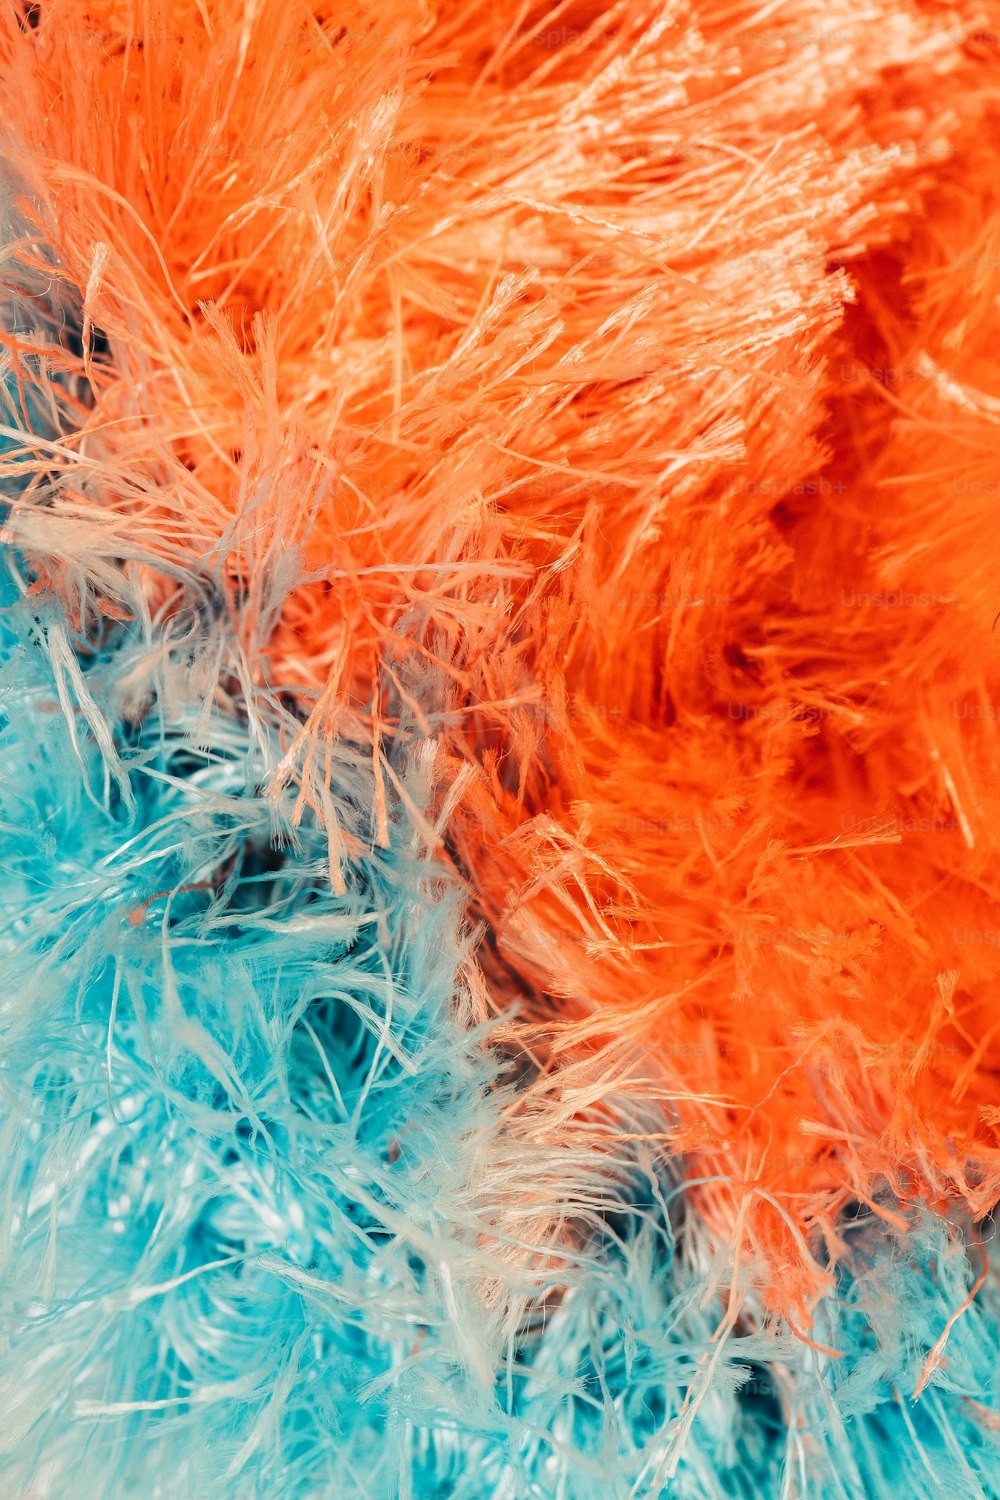 a close up of a blue, orange and white fur